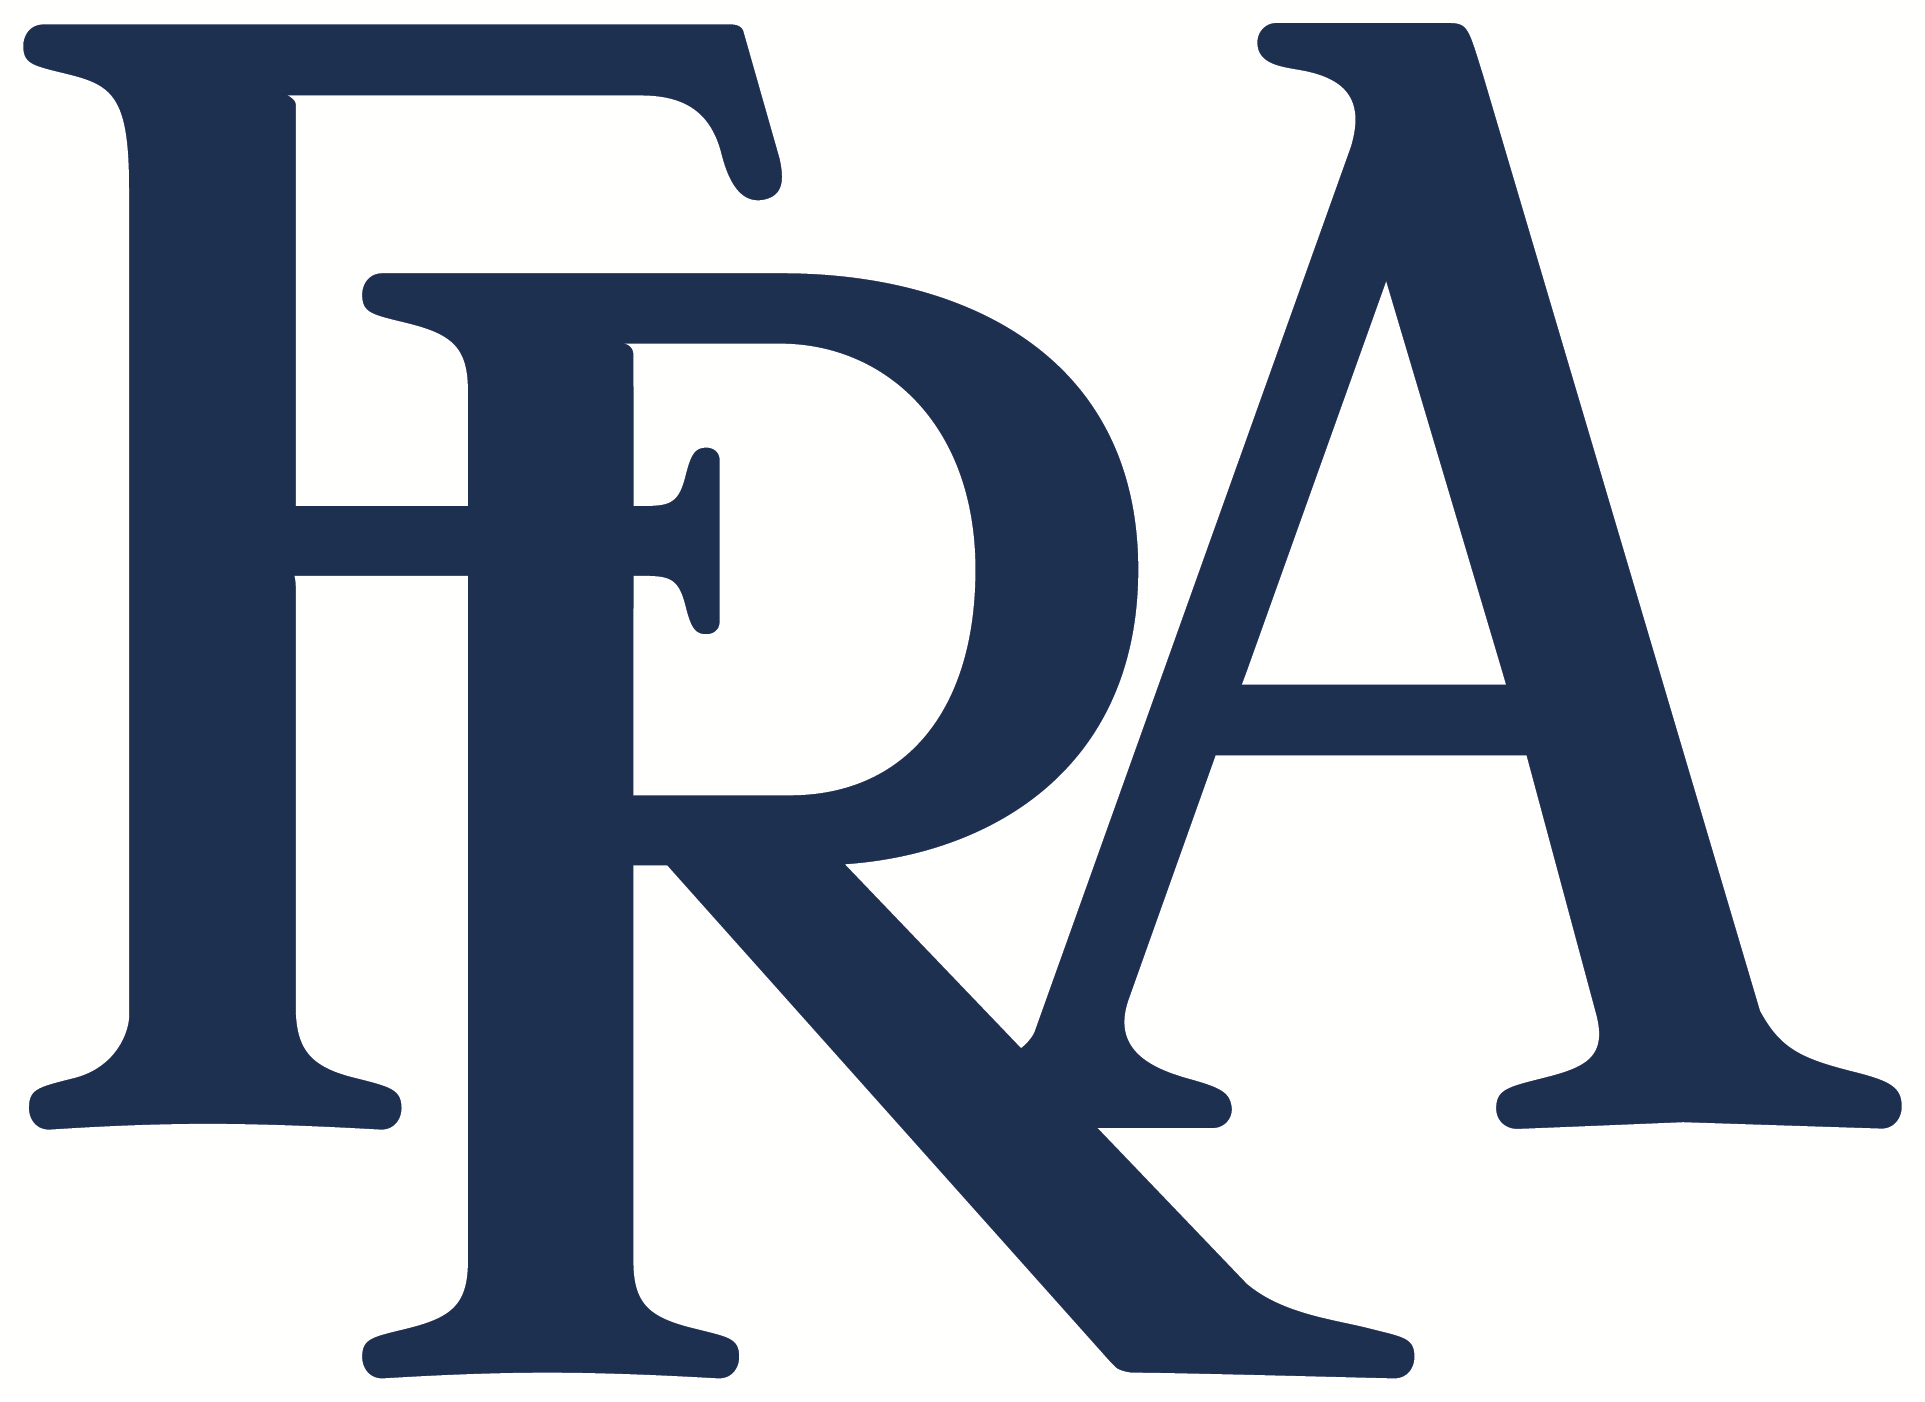 Franklin Road Academy logo